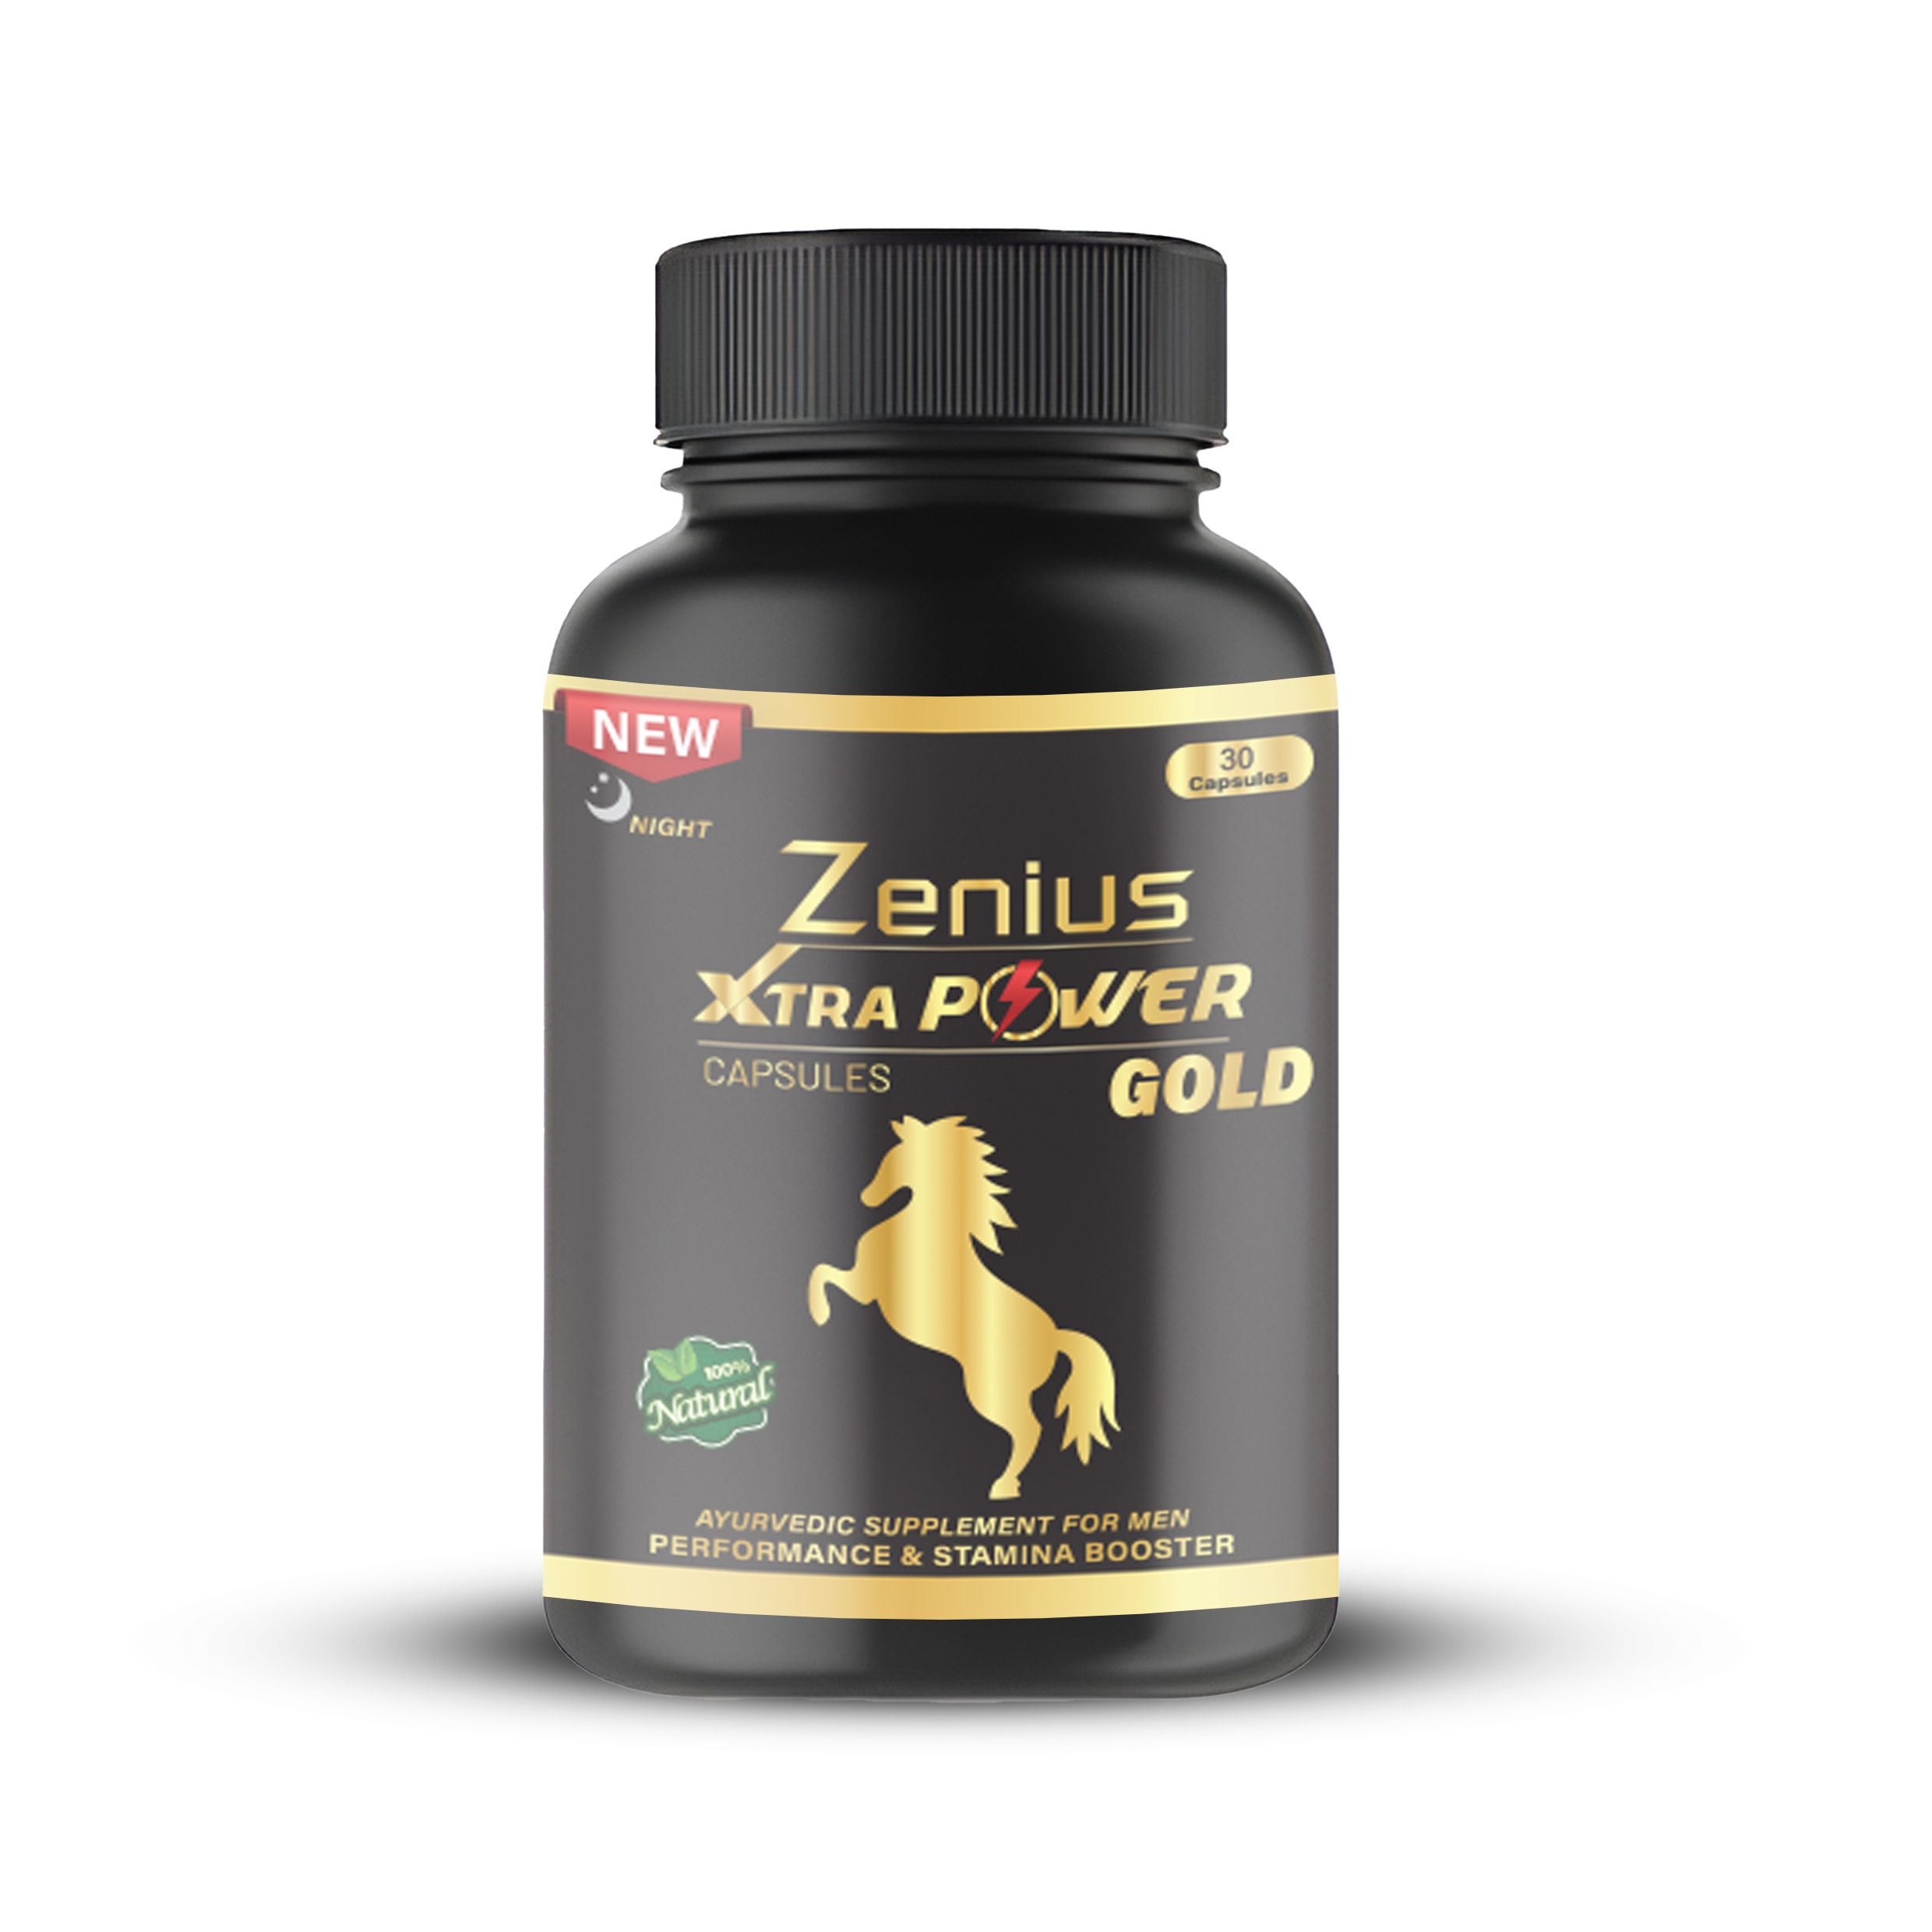 Buy Zenius Xtar Power Gold Capsule_E at Best Price Online